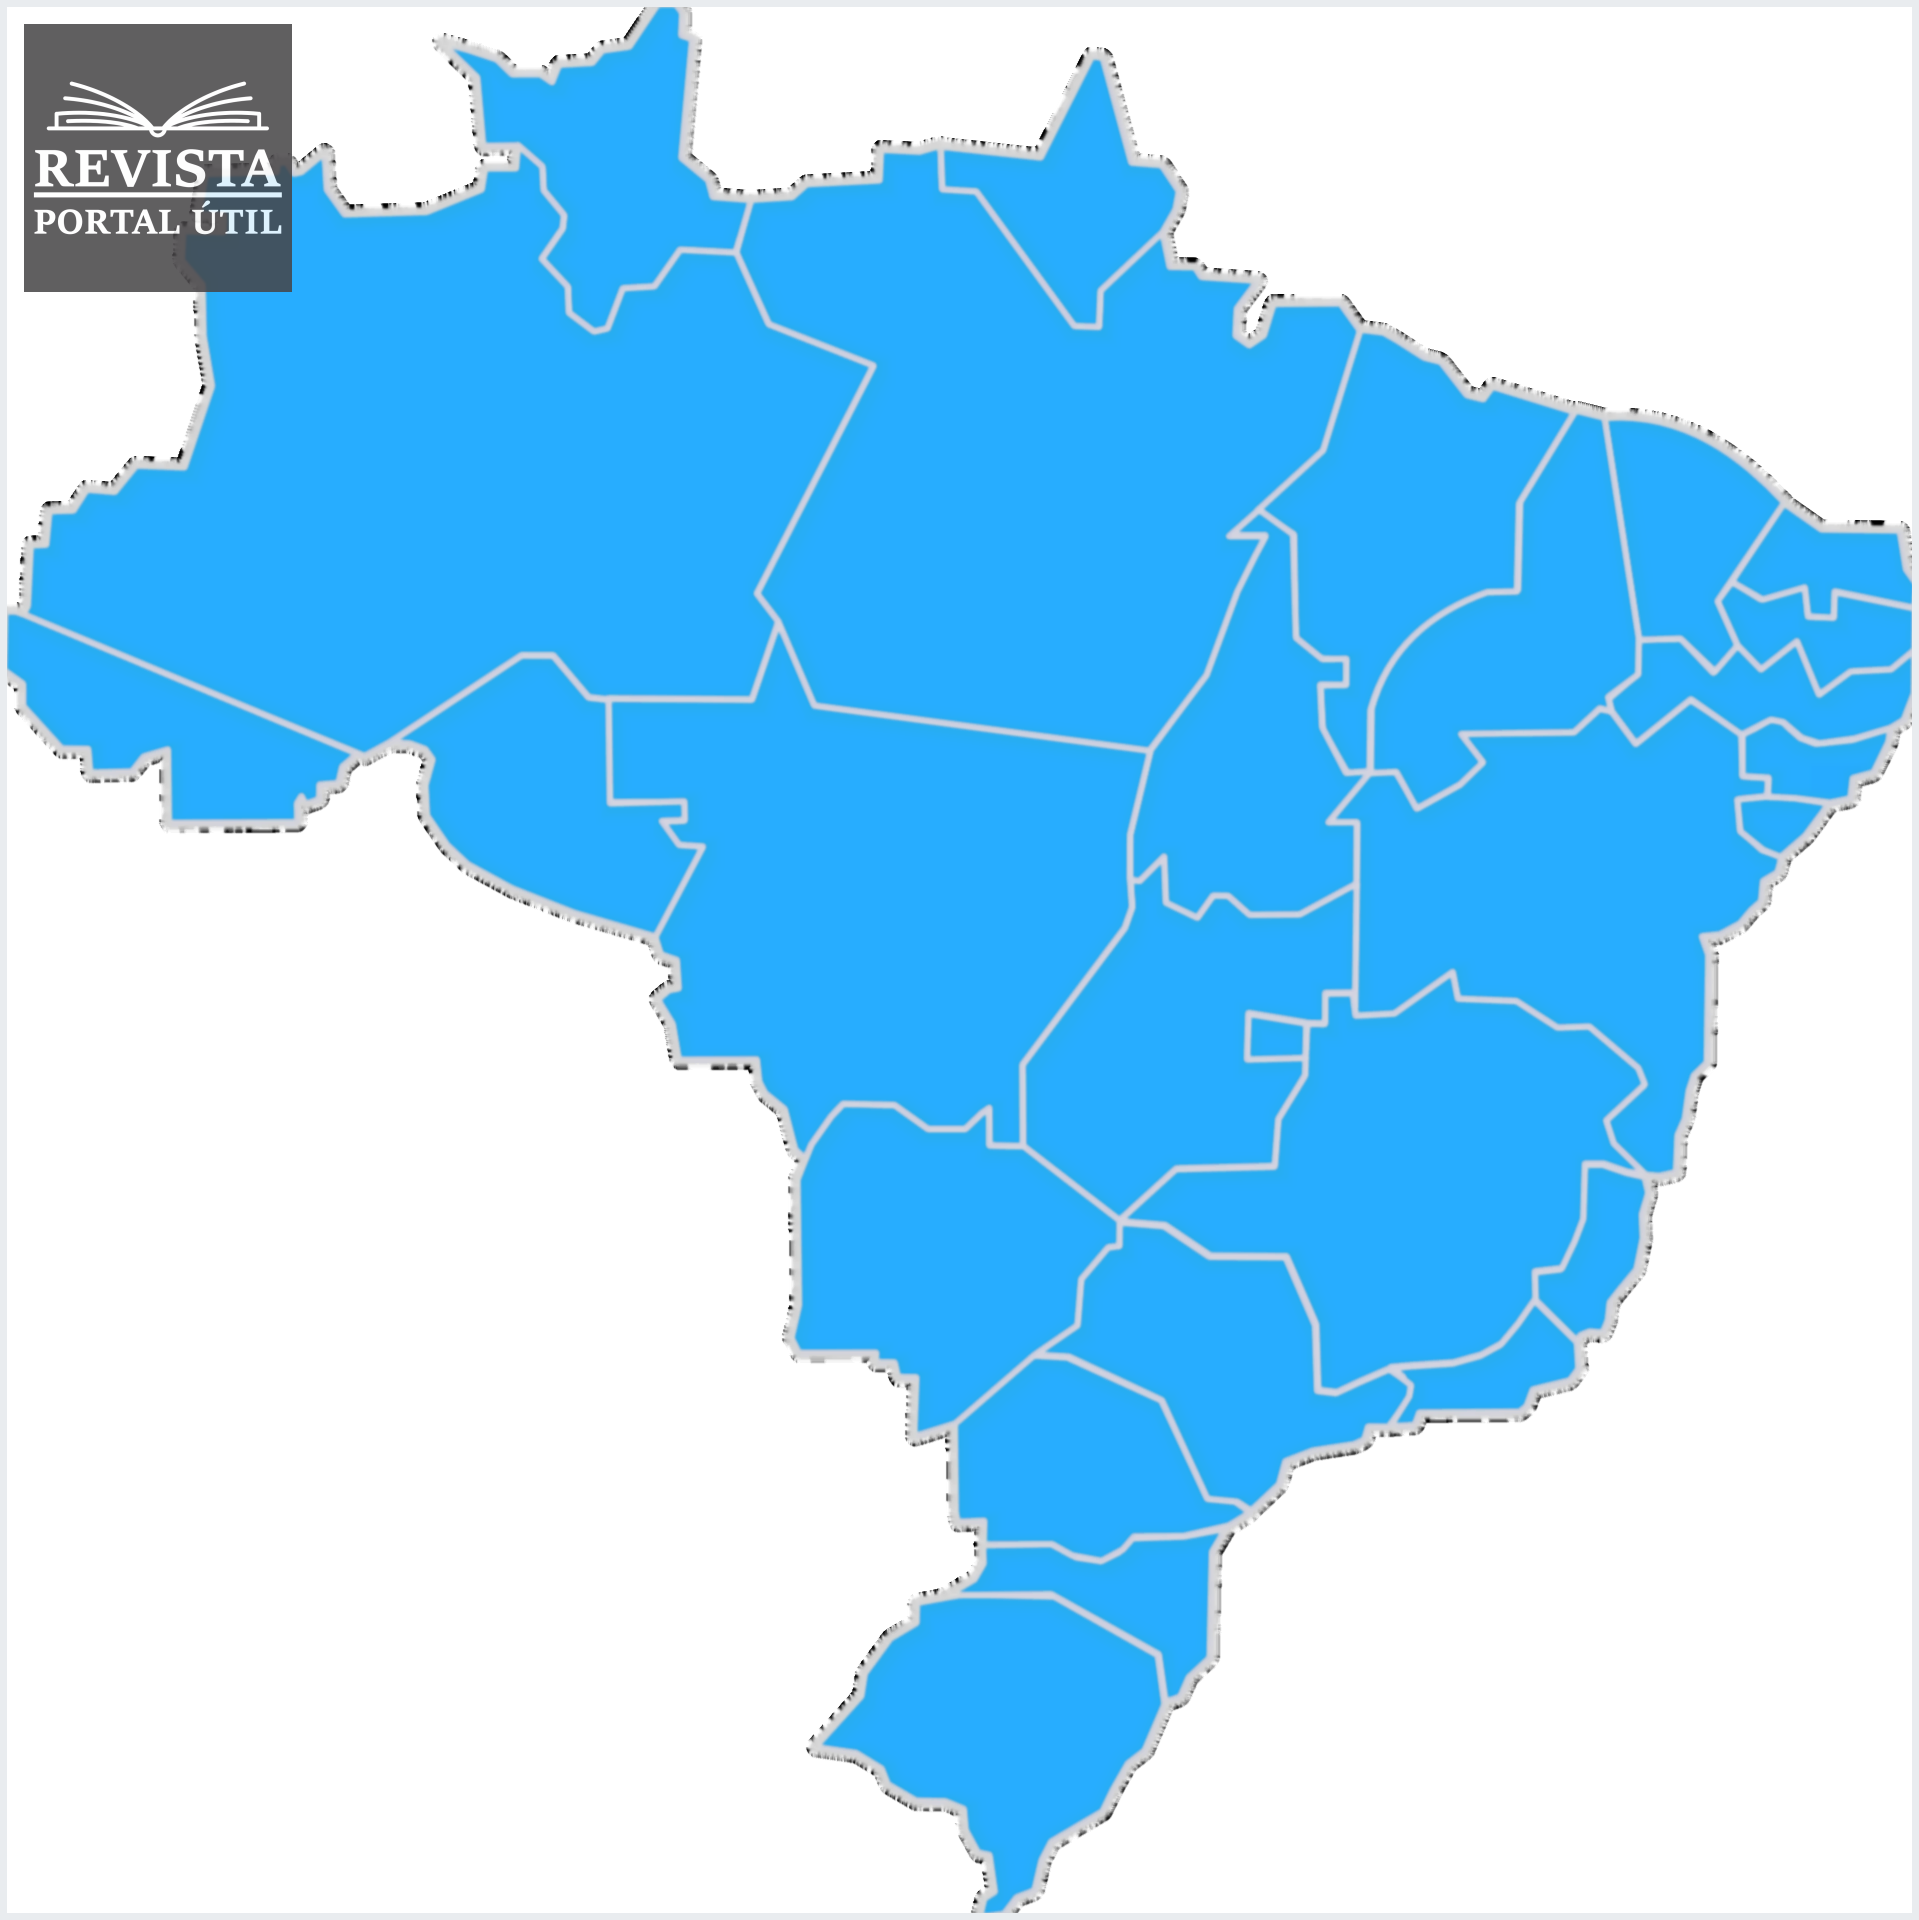 Mapa geográfico do Brasil